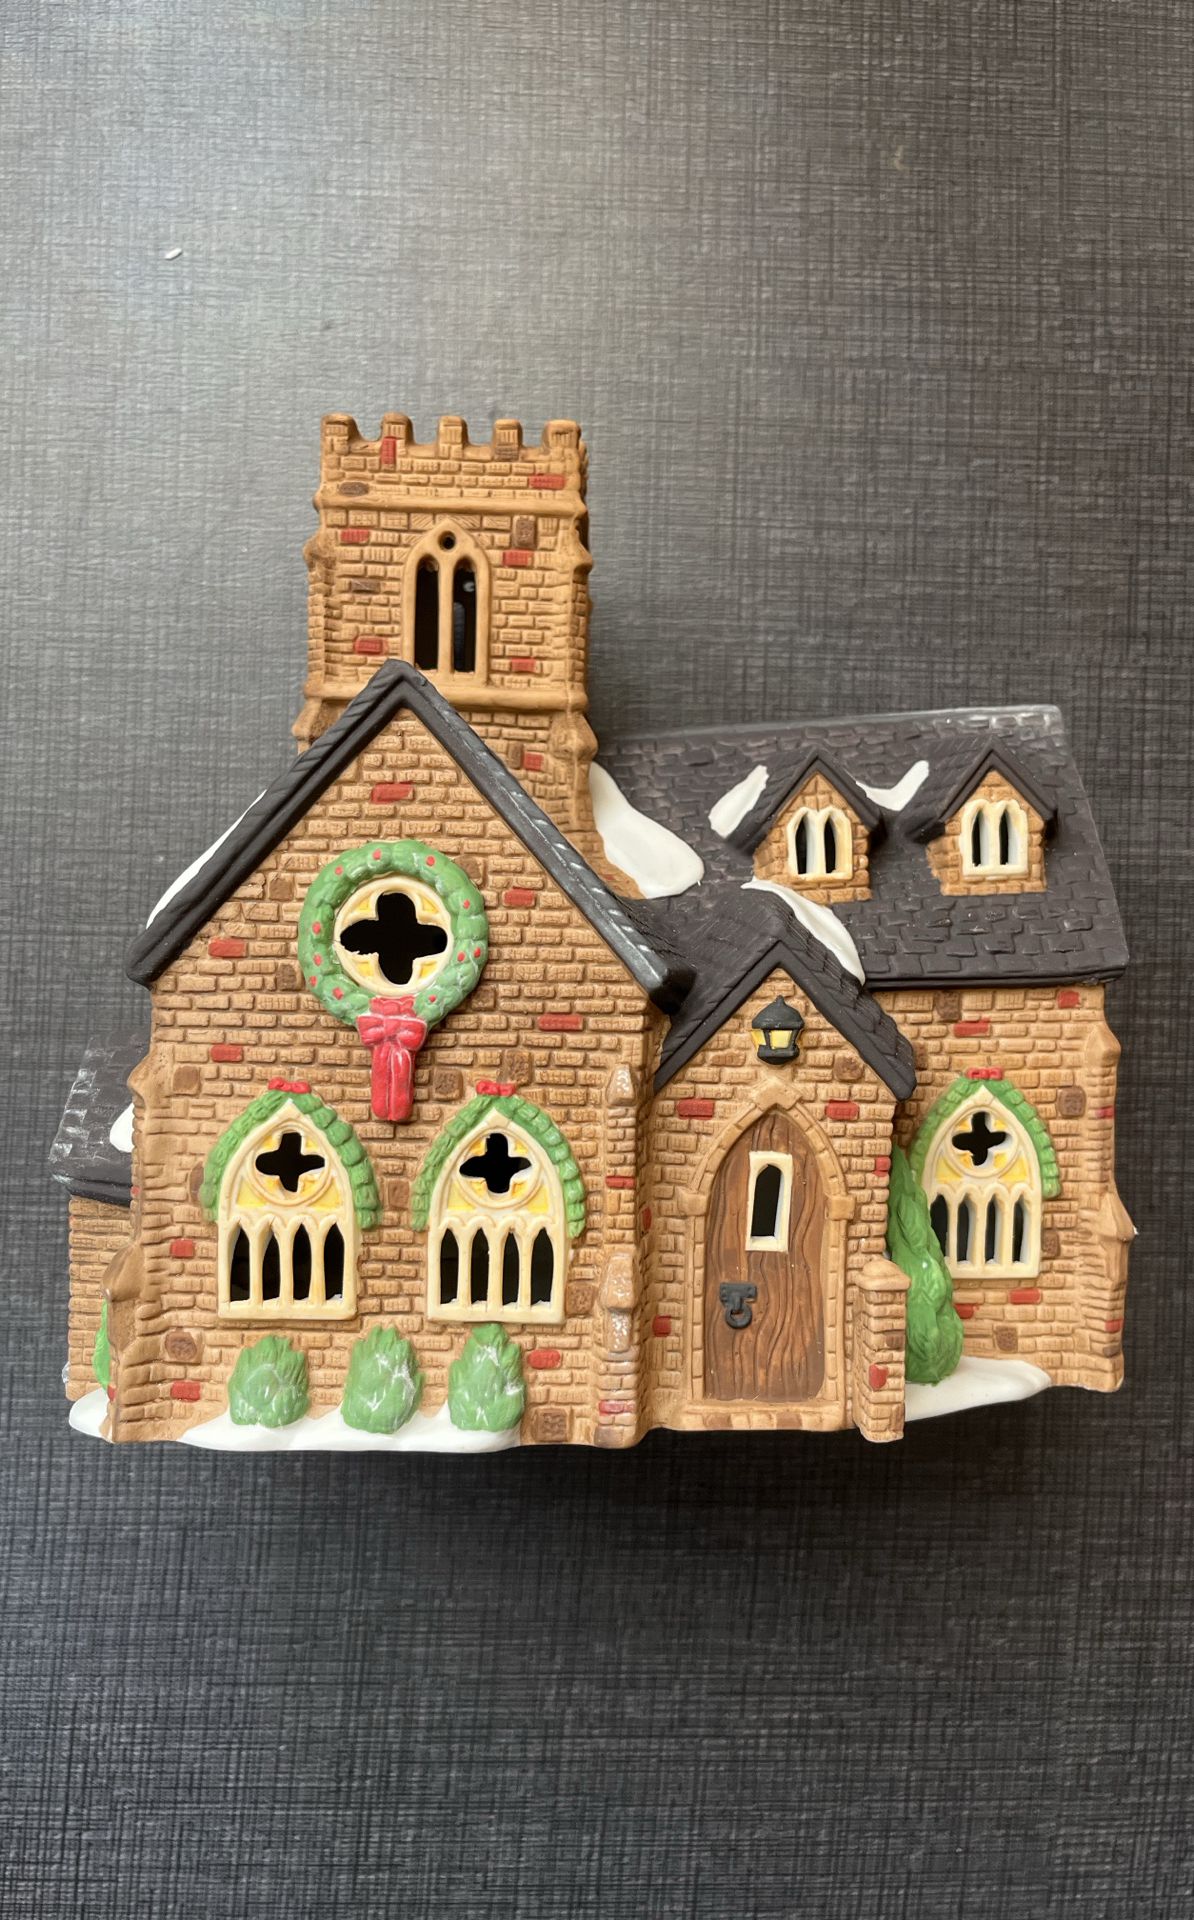 Dept 56 Dickens’ Village “Knottinghill Church”